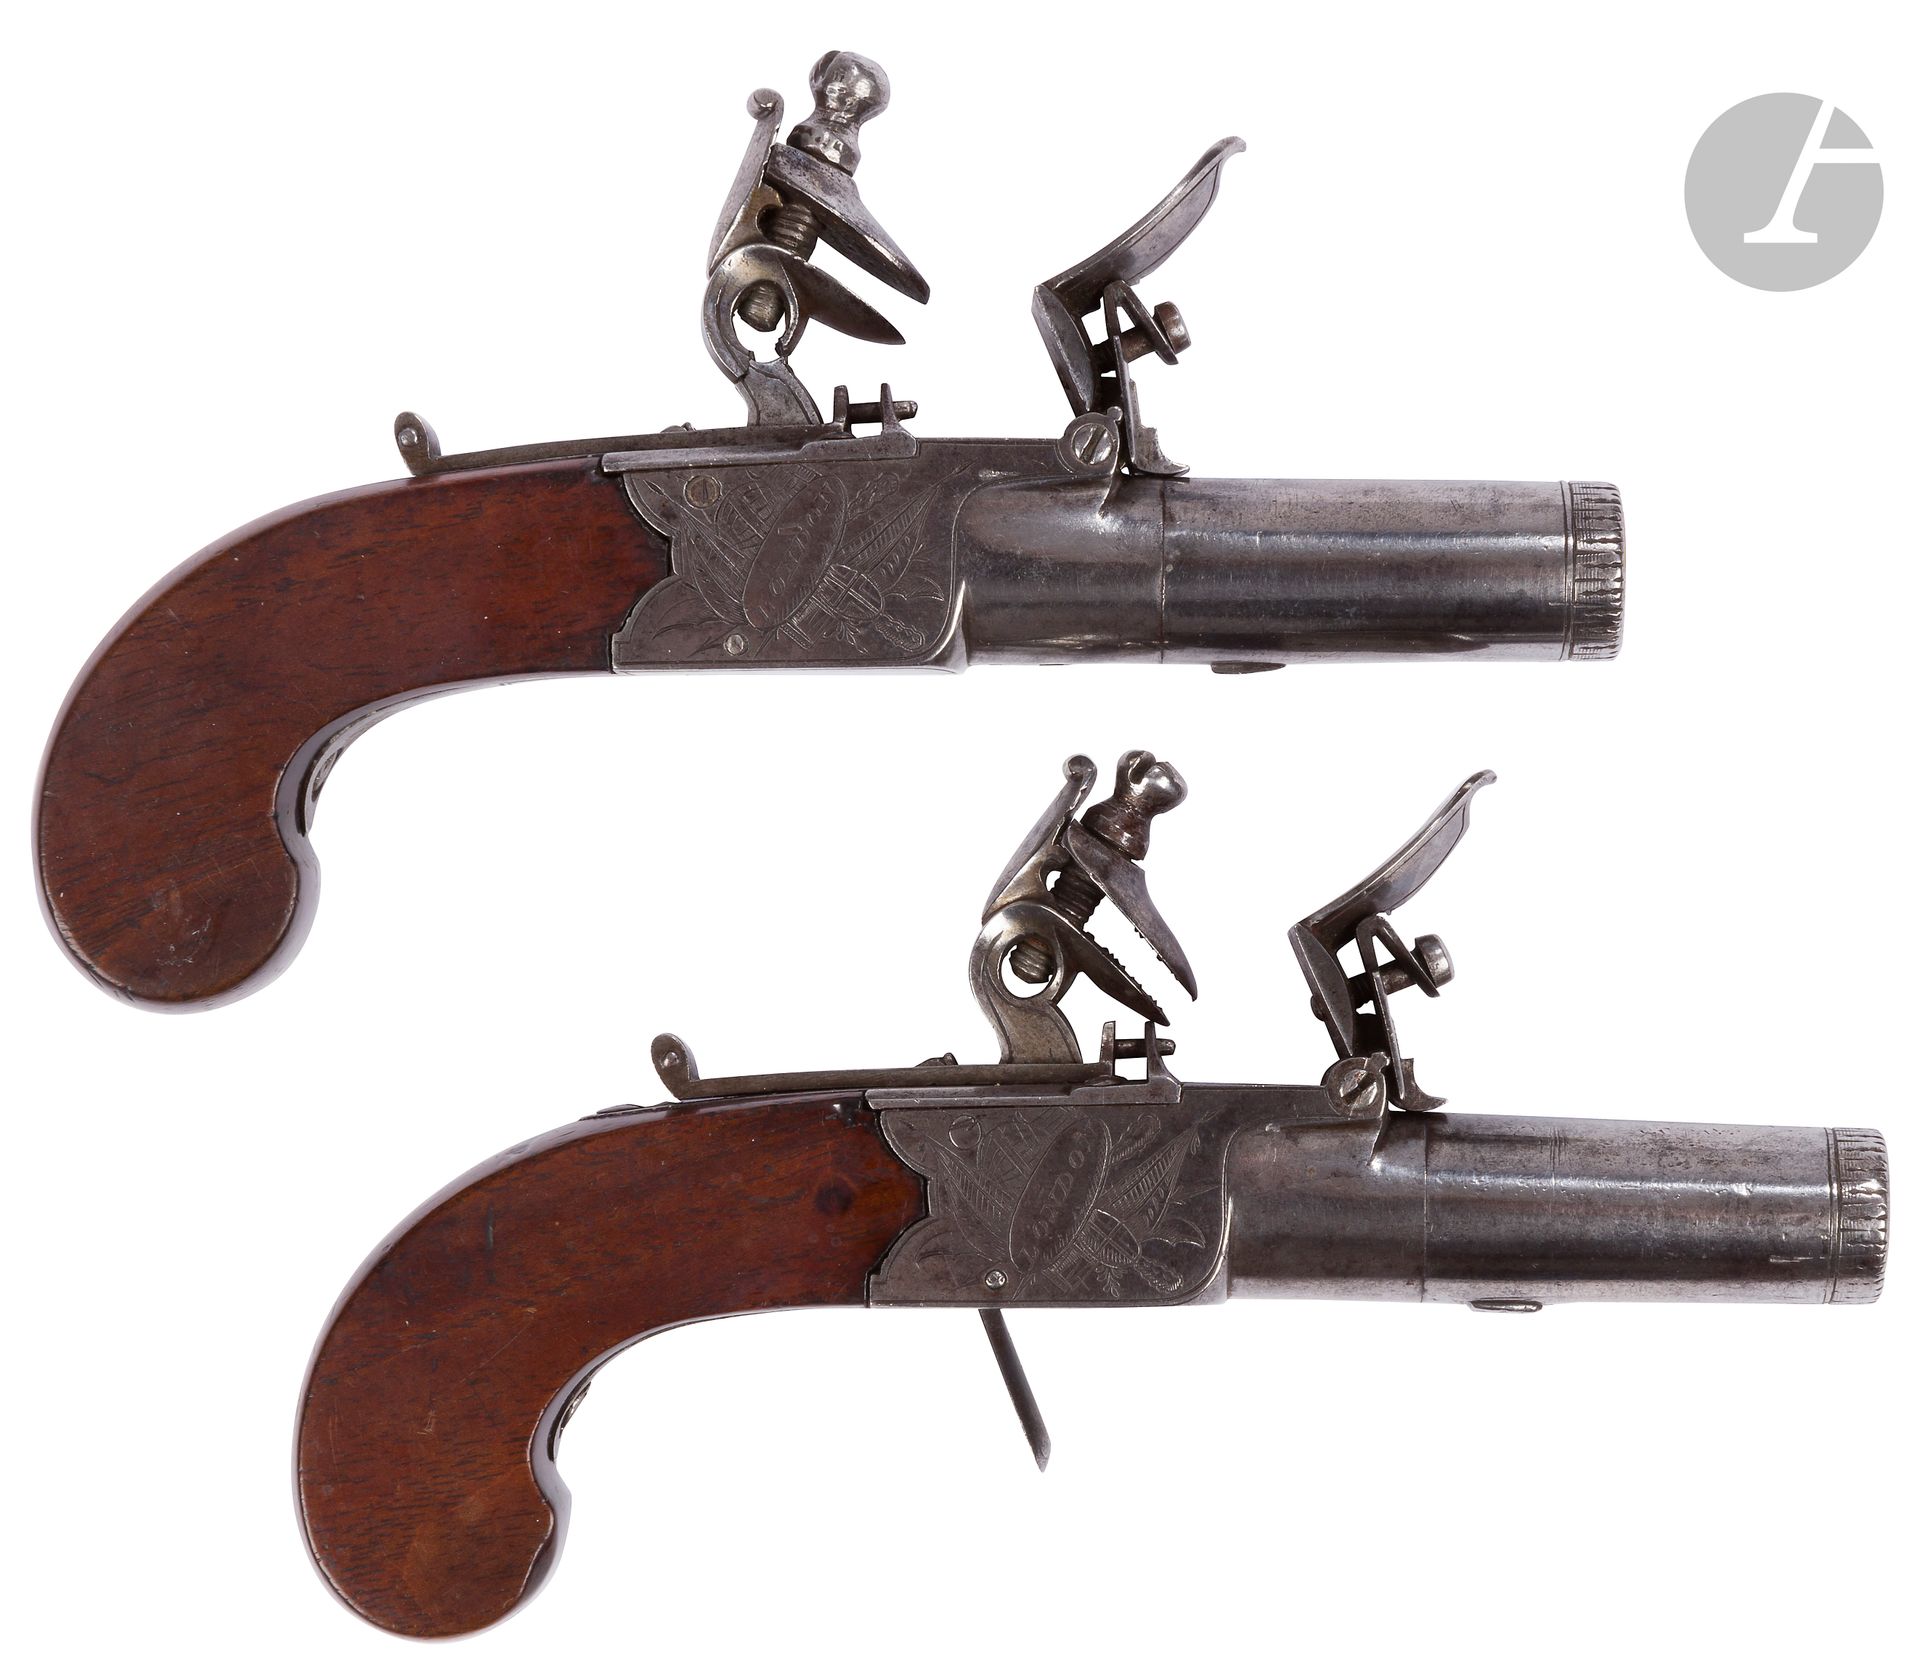 Null 一对燧发枪盒式手枪
圆形枪管，带强迫性子弹。刻有 "W.琼斯-伦敦"。凹陷的触发器。胡桃木枪托，平颊。
公元前约1800年（其中一个锤子完整，但已破碎&hellip;